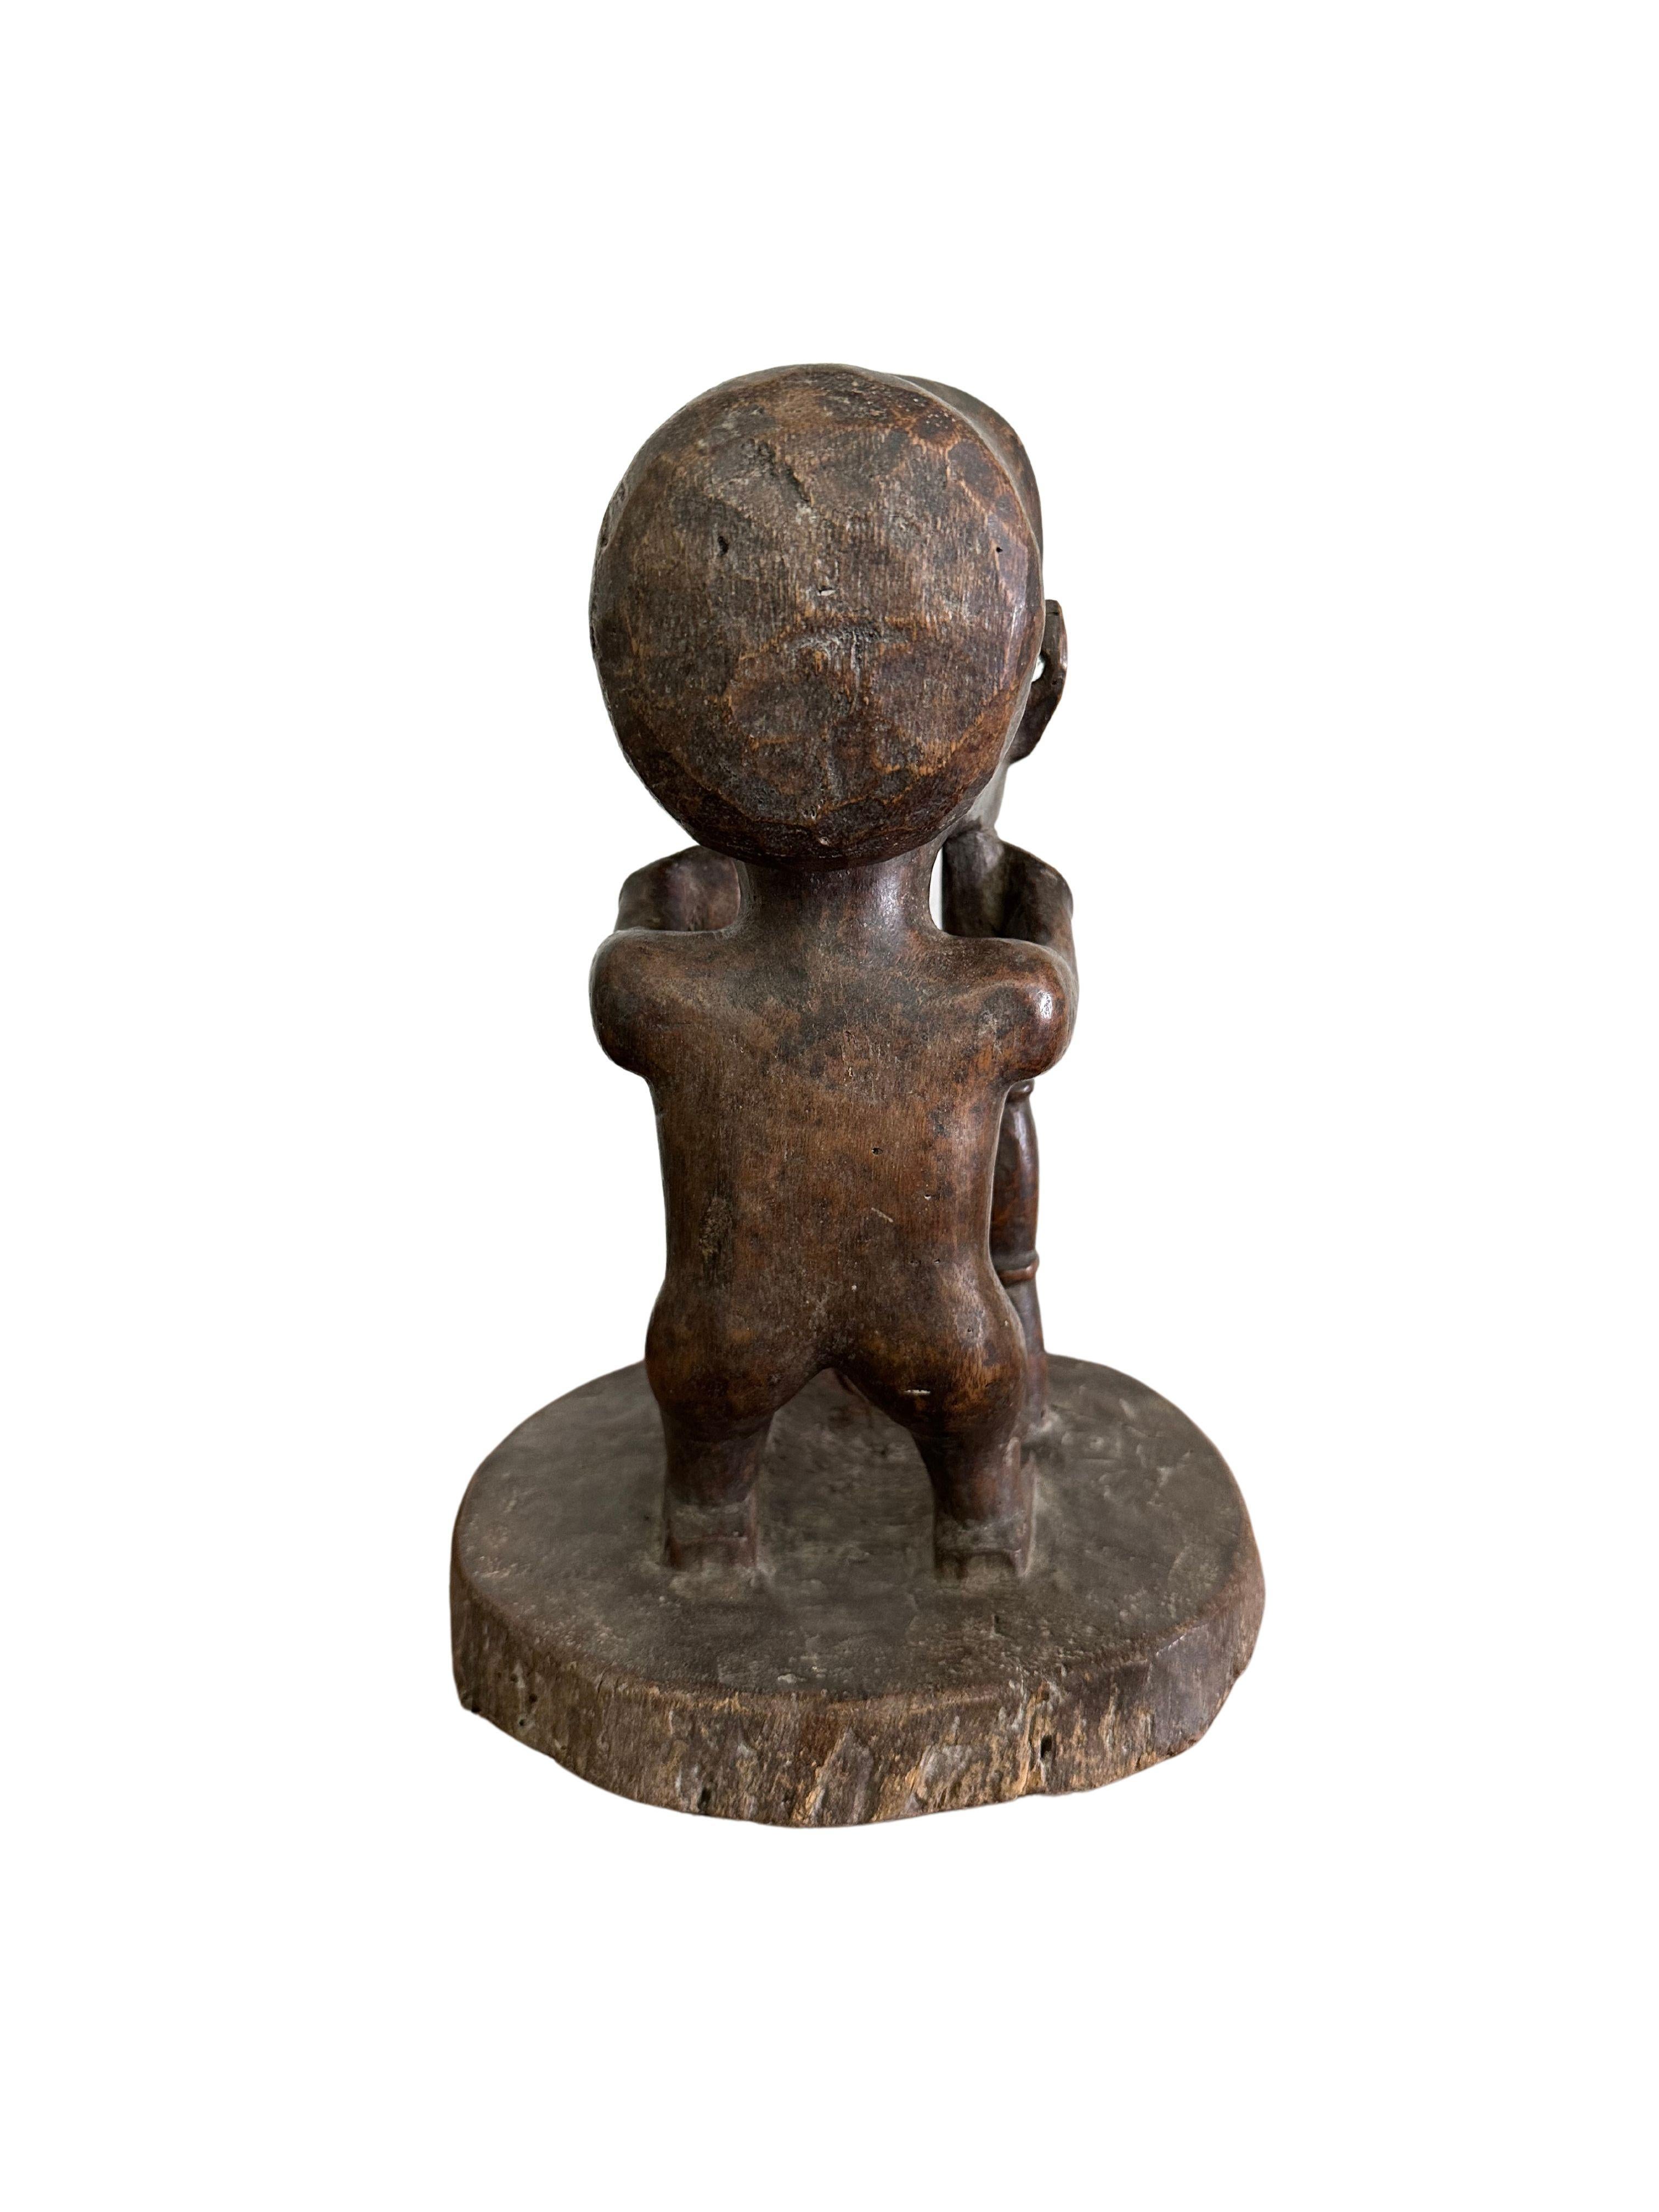 Indonesian Rare Korwar Ancestral Figure West Papua, Indonesia c. 1800